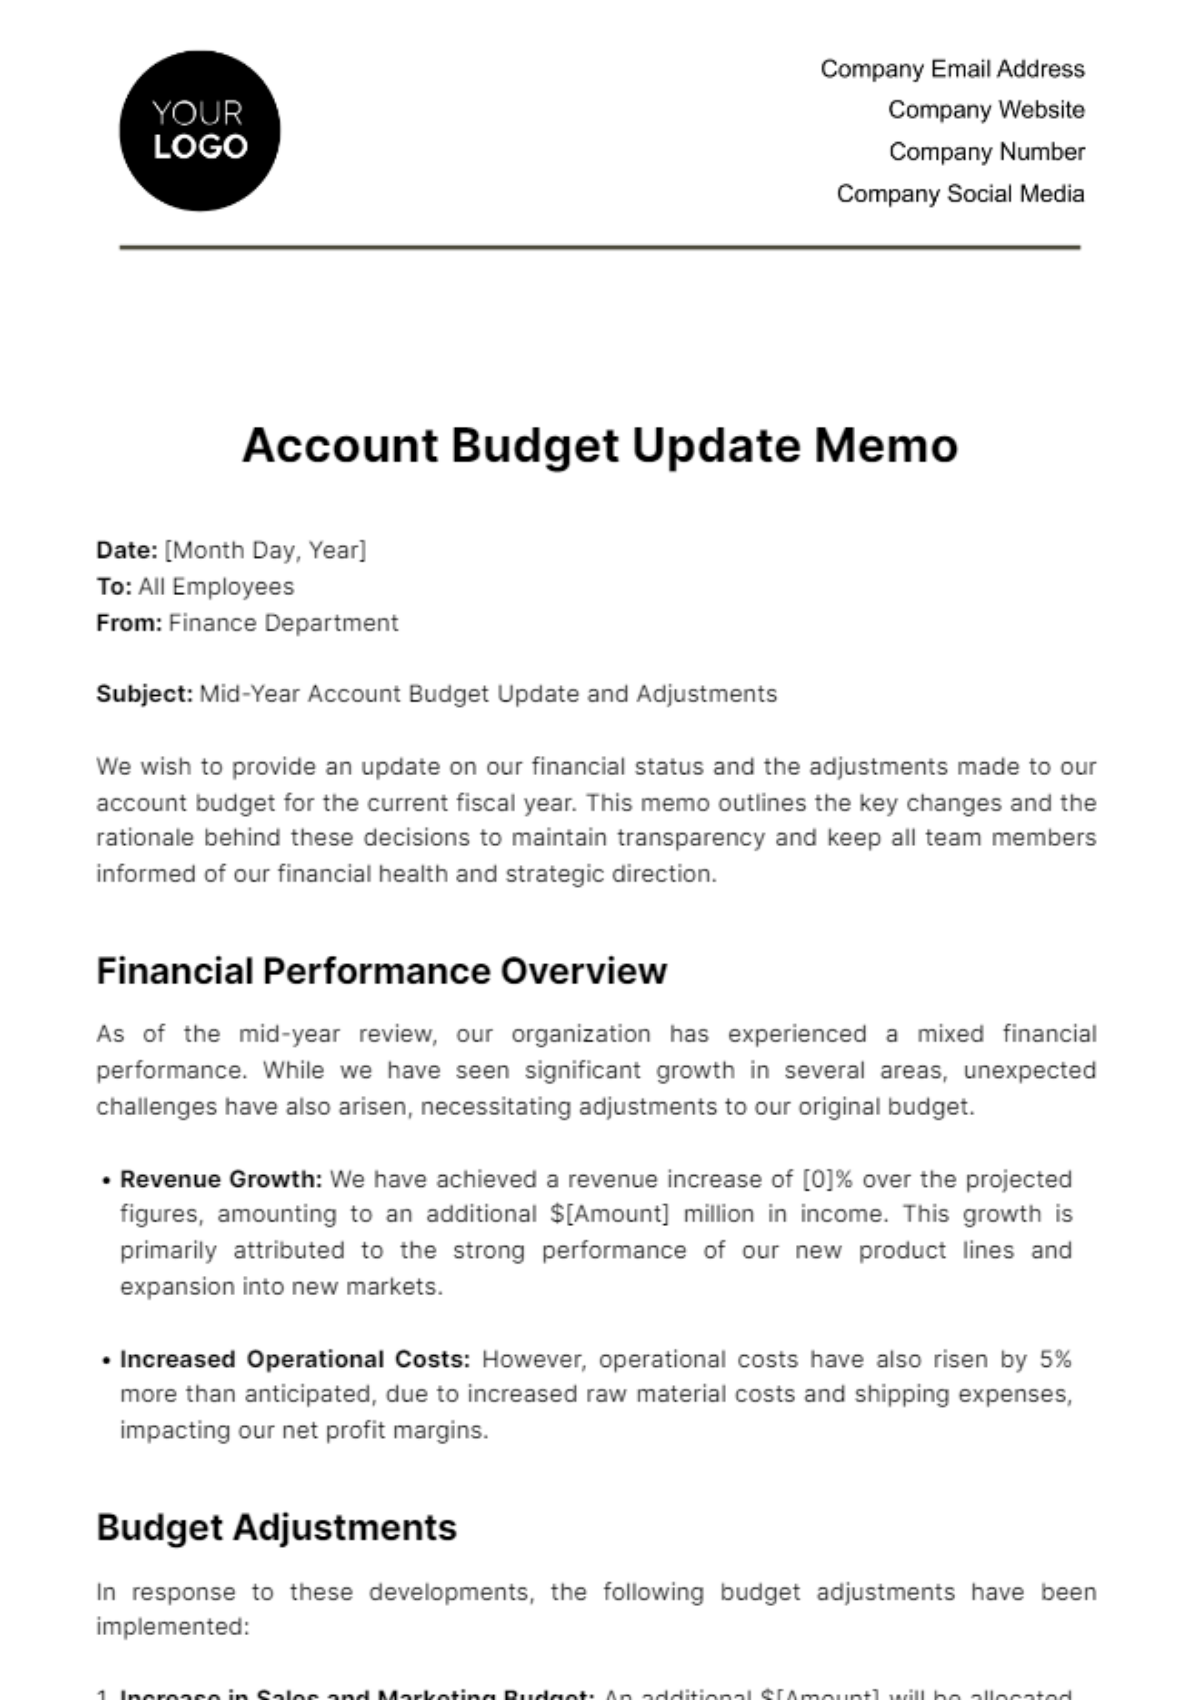 Free Account Budget Update Memo Template